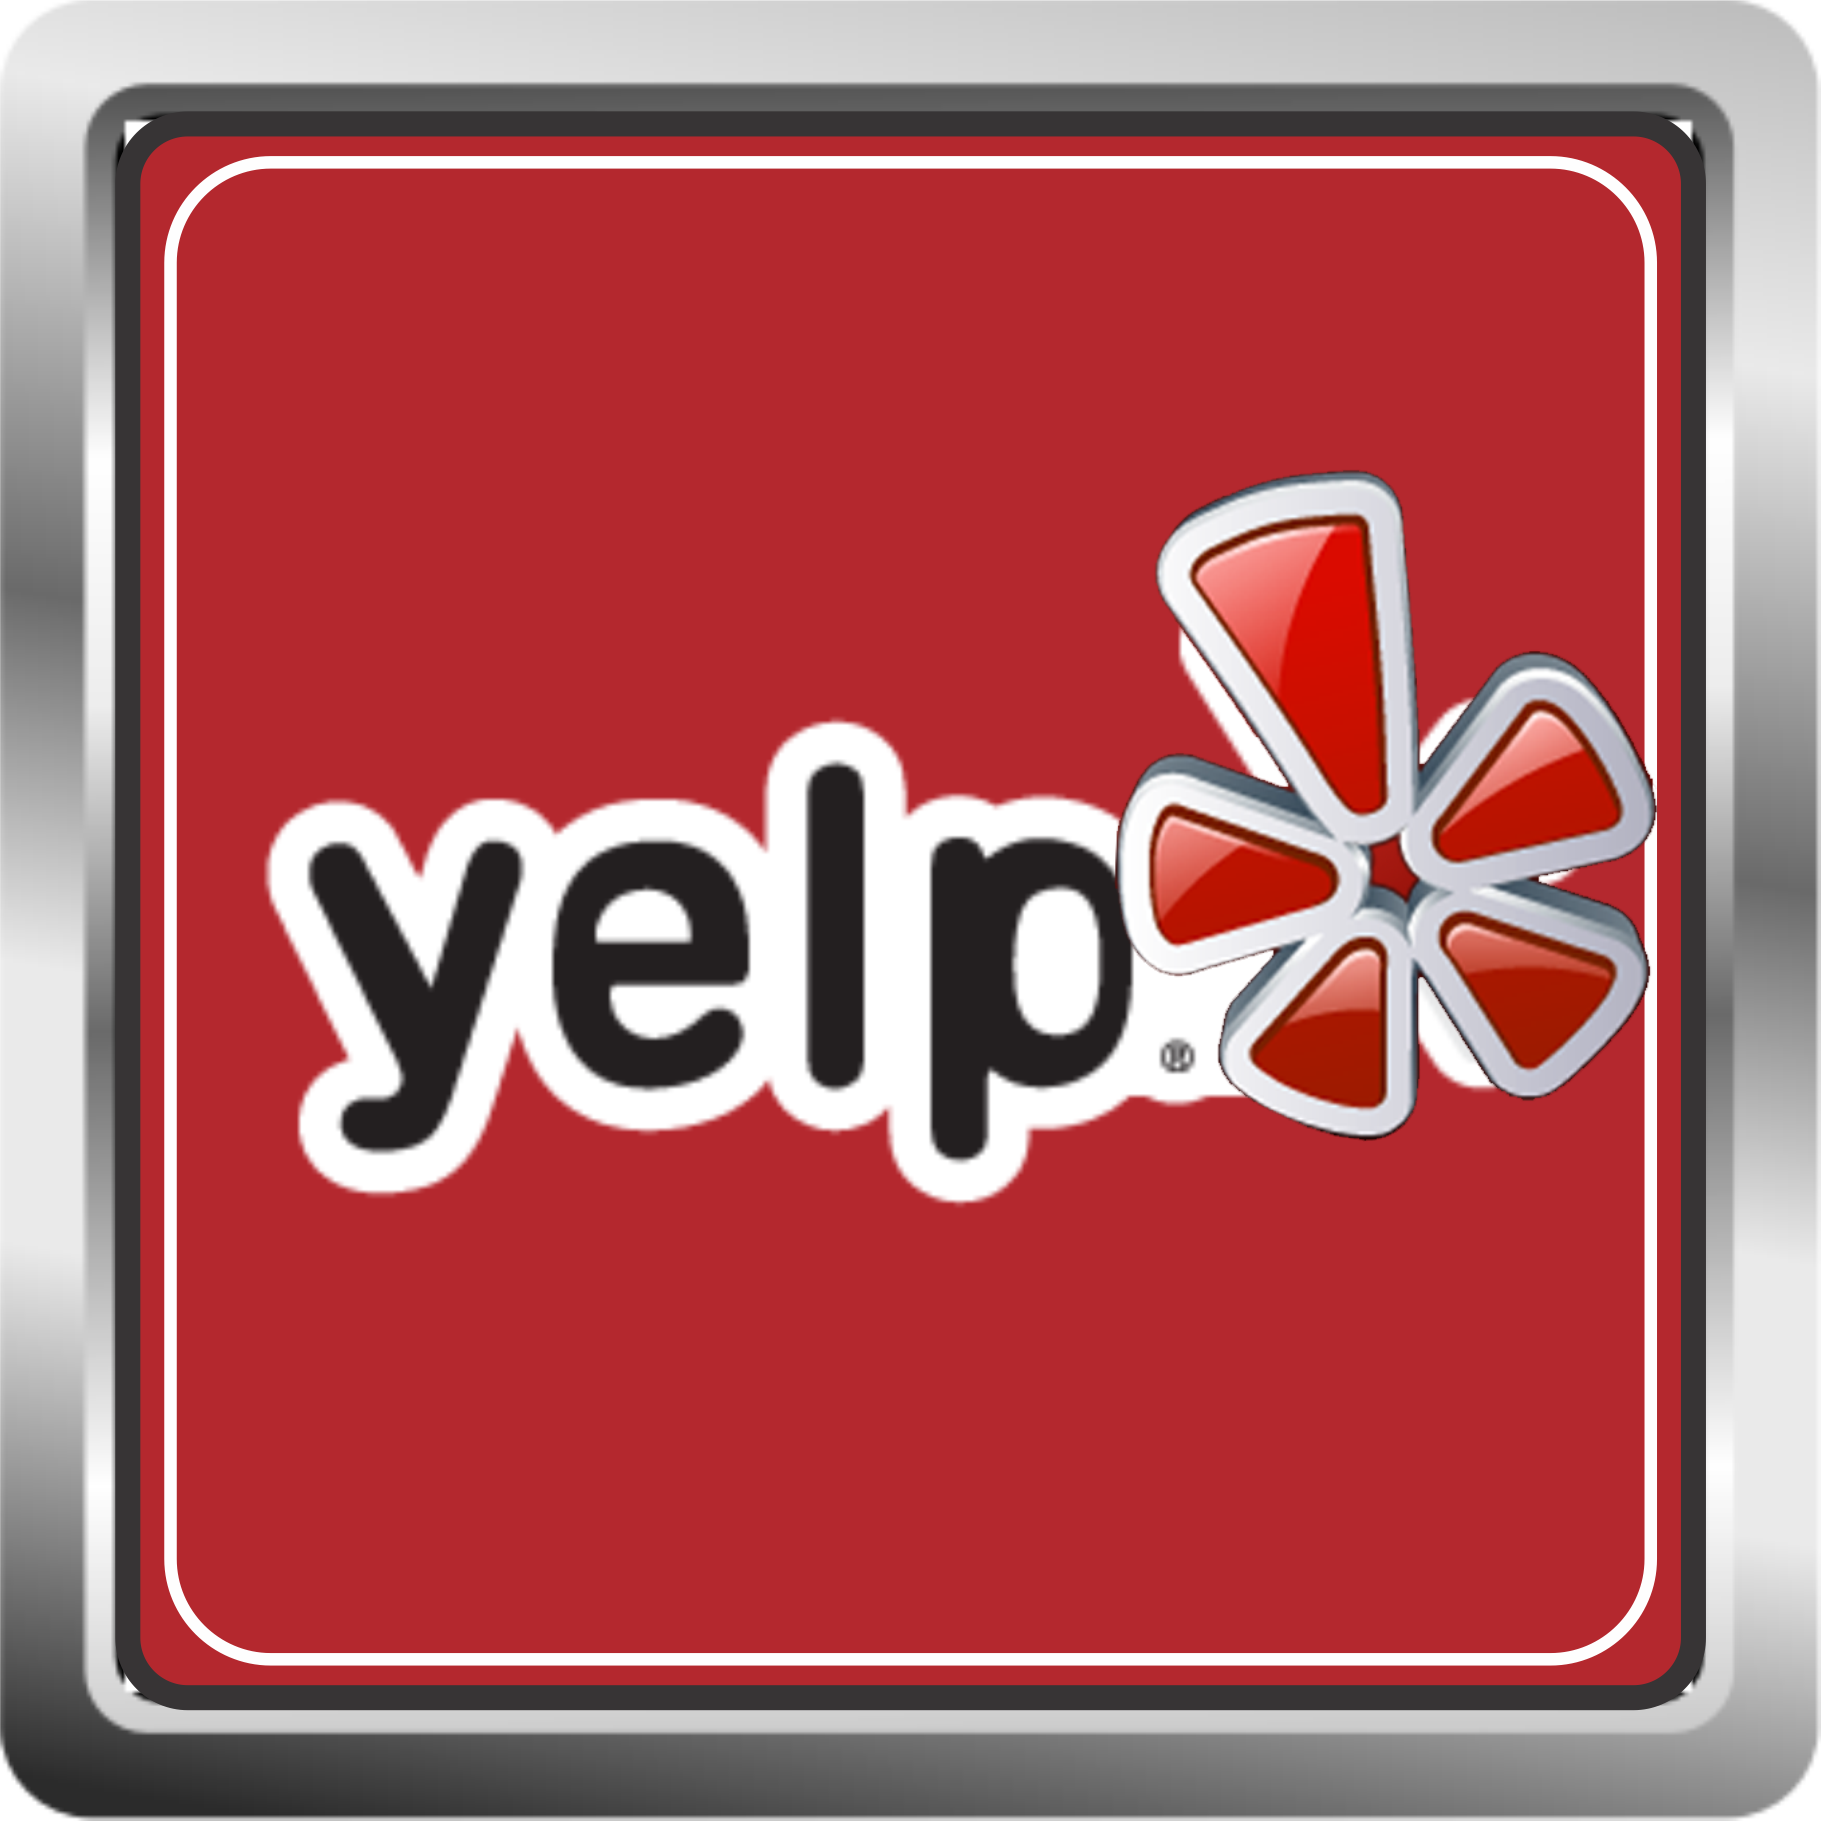 YELP - Customer Reviews